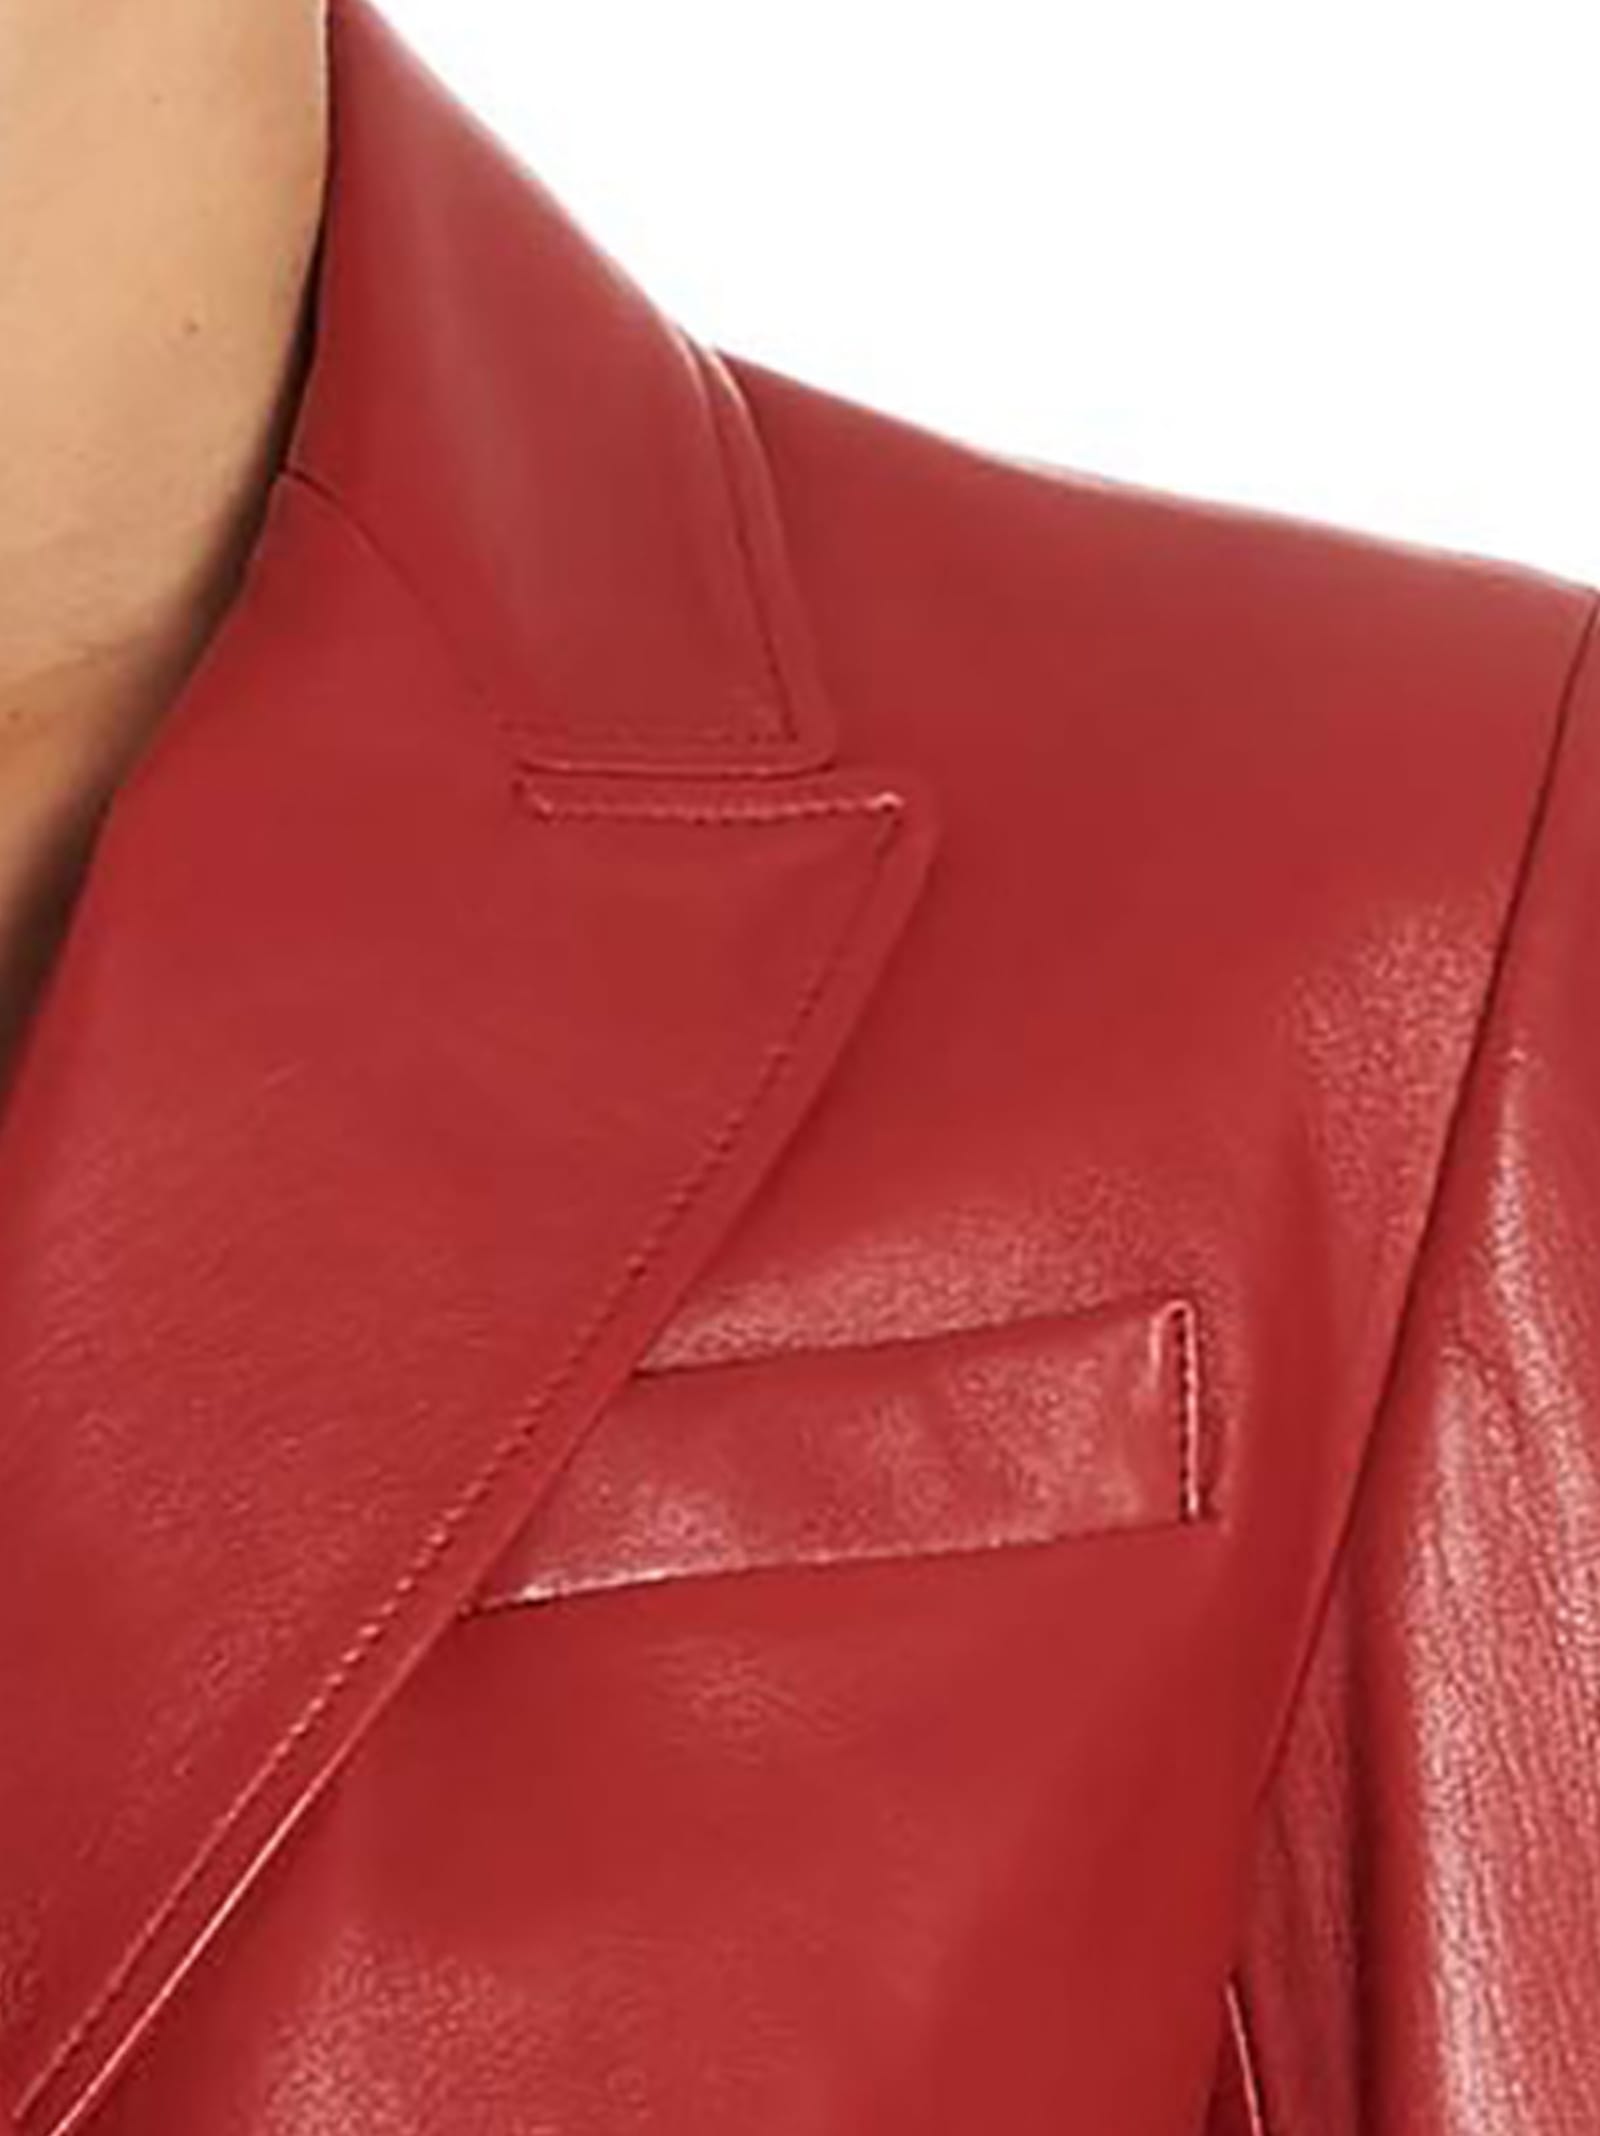 alexander mcqueen red leather jacket